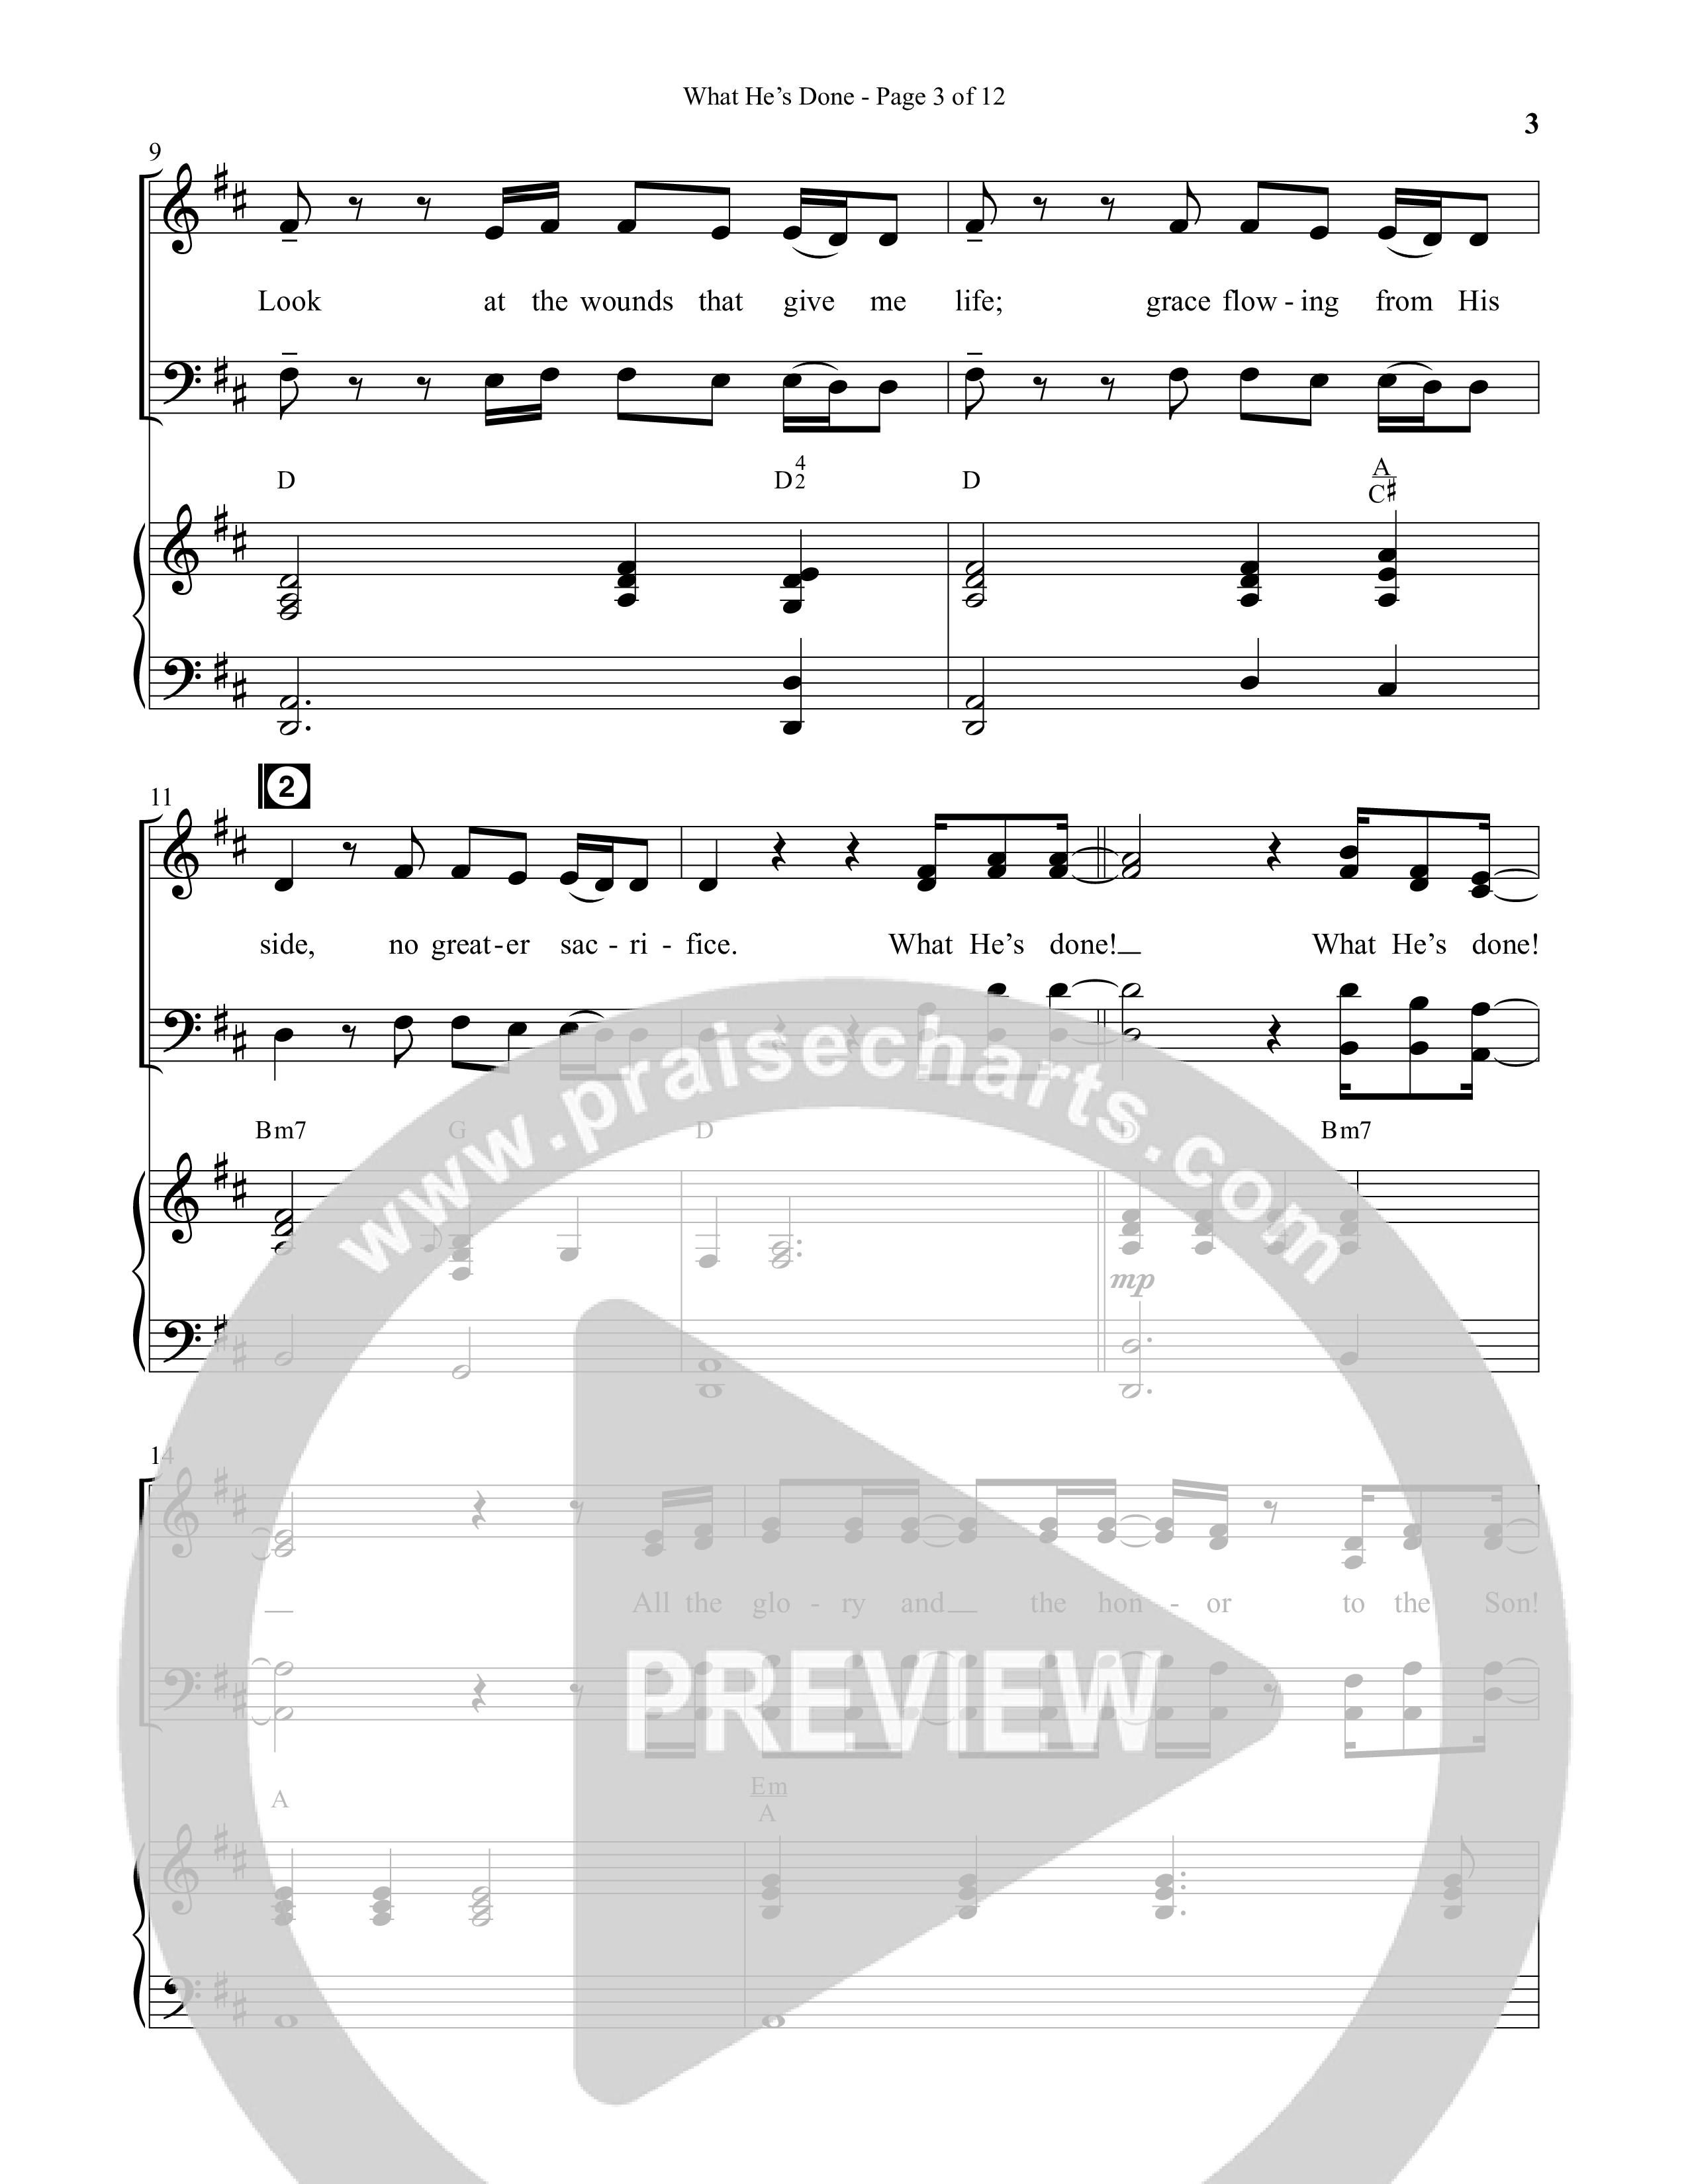 What He's Done (Choral Anthem SATB) Anthem (SATB/Piano) (Semsen Music / Arr. Cliff Duren)